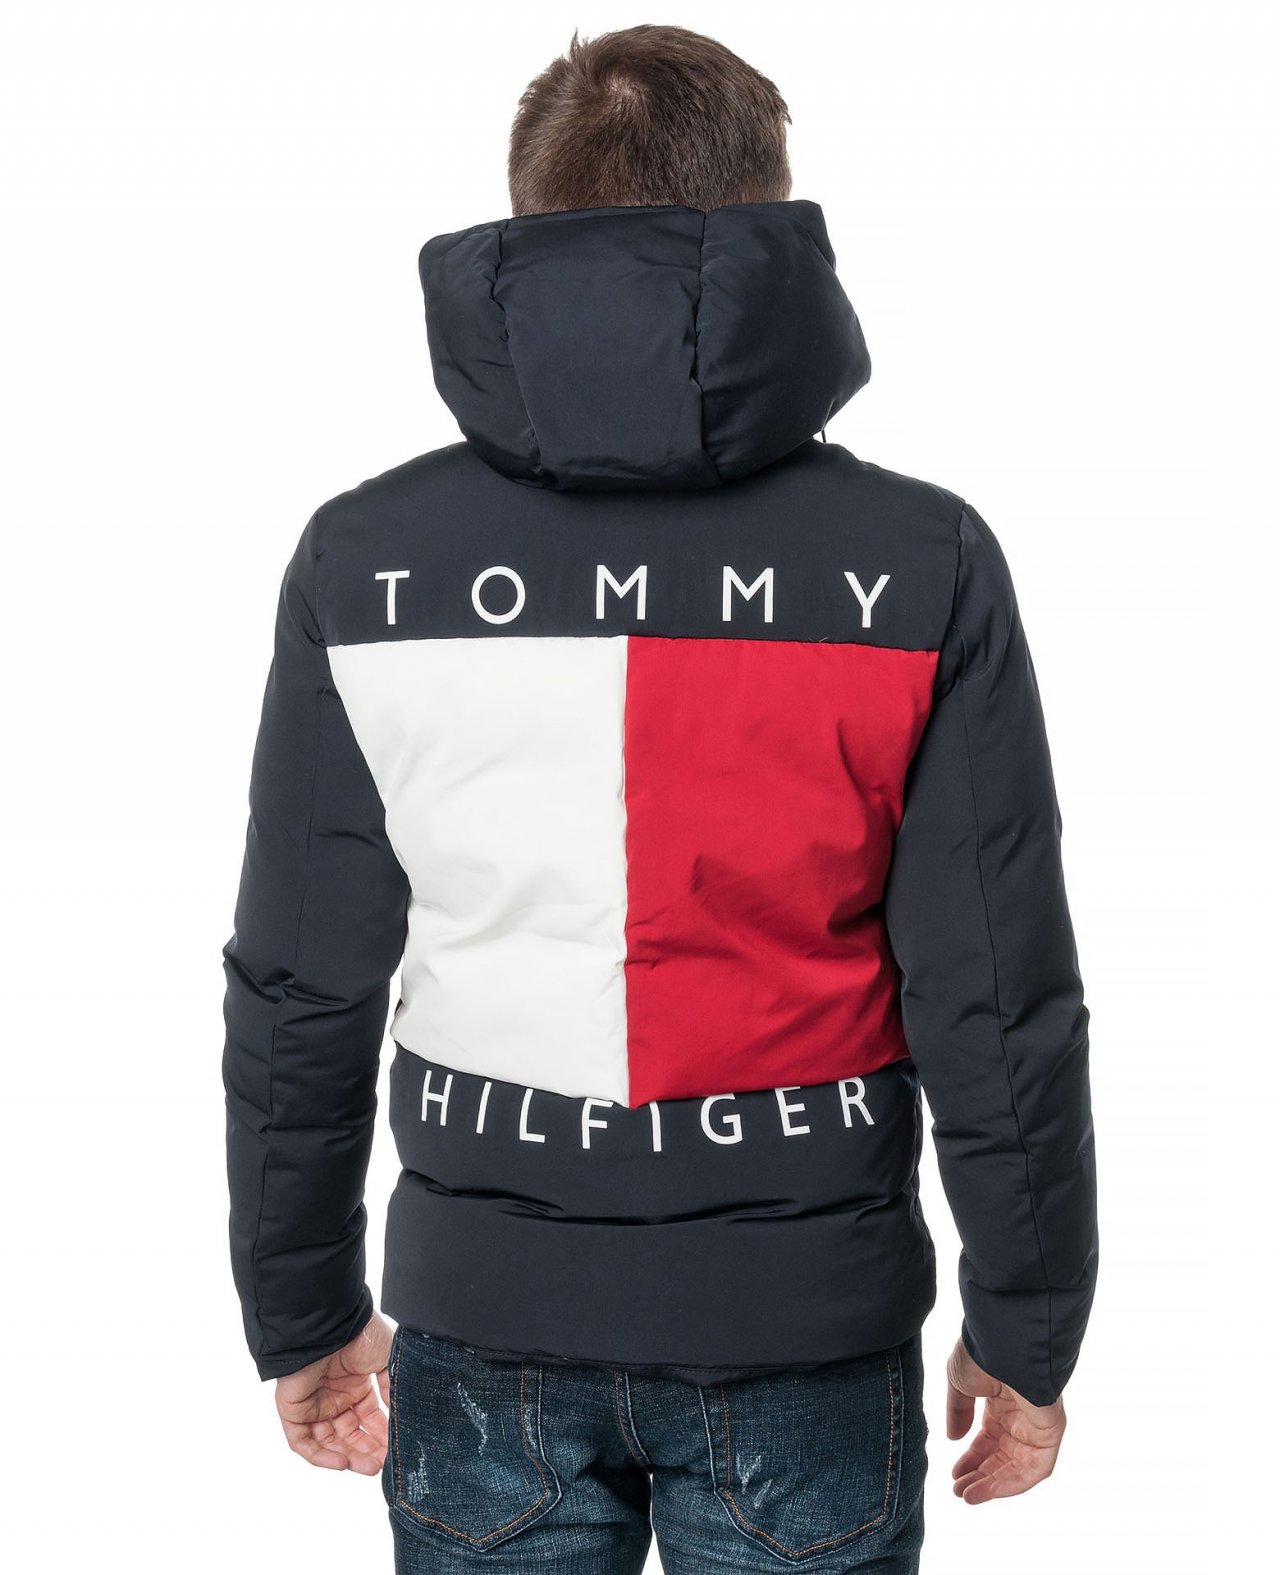 Купить куртку томми хилфигер. Зимняя куртка Томми Хилфигер. Tommy Hilfiger зима  Jacket. Куртка Томми Хилфигер мужские зимние. Куртка Tommy Hilfiger мужская зимняя.